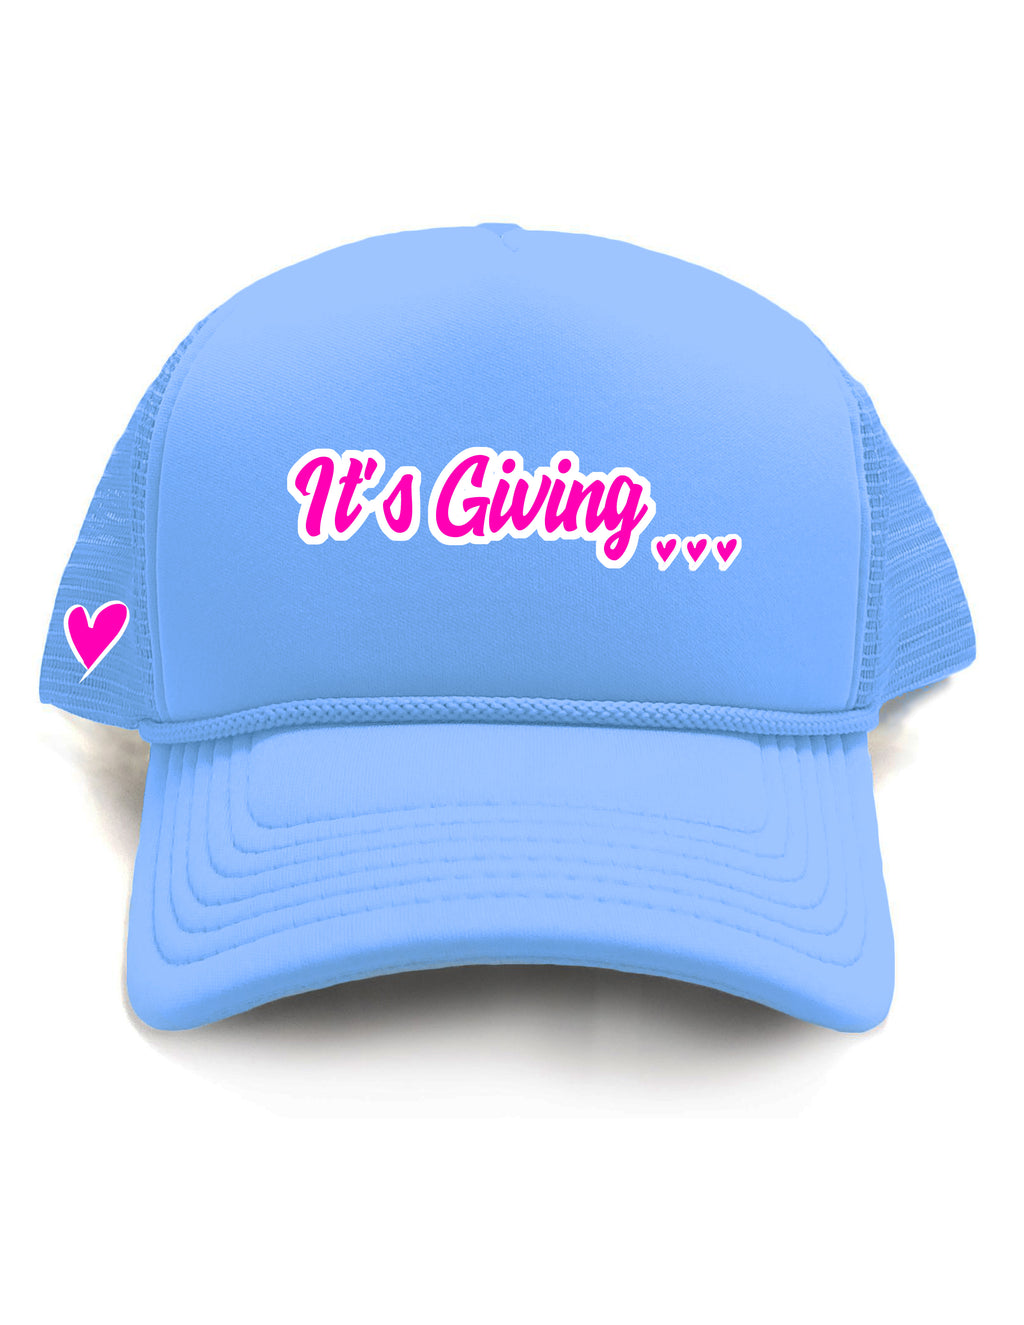 It’s Giving…